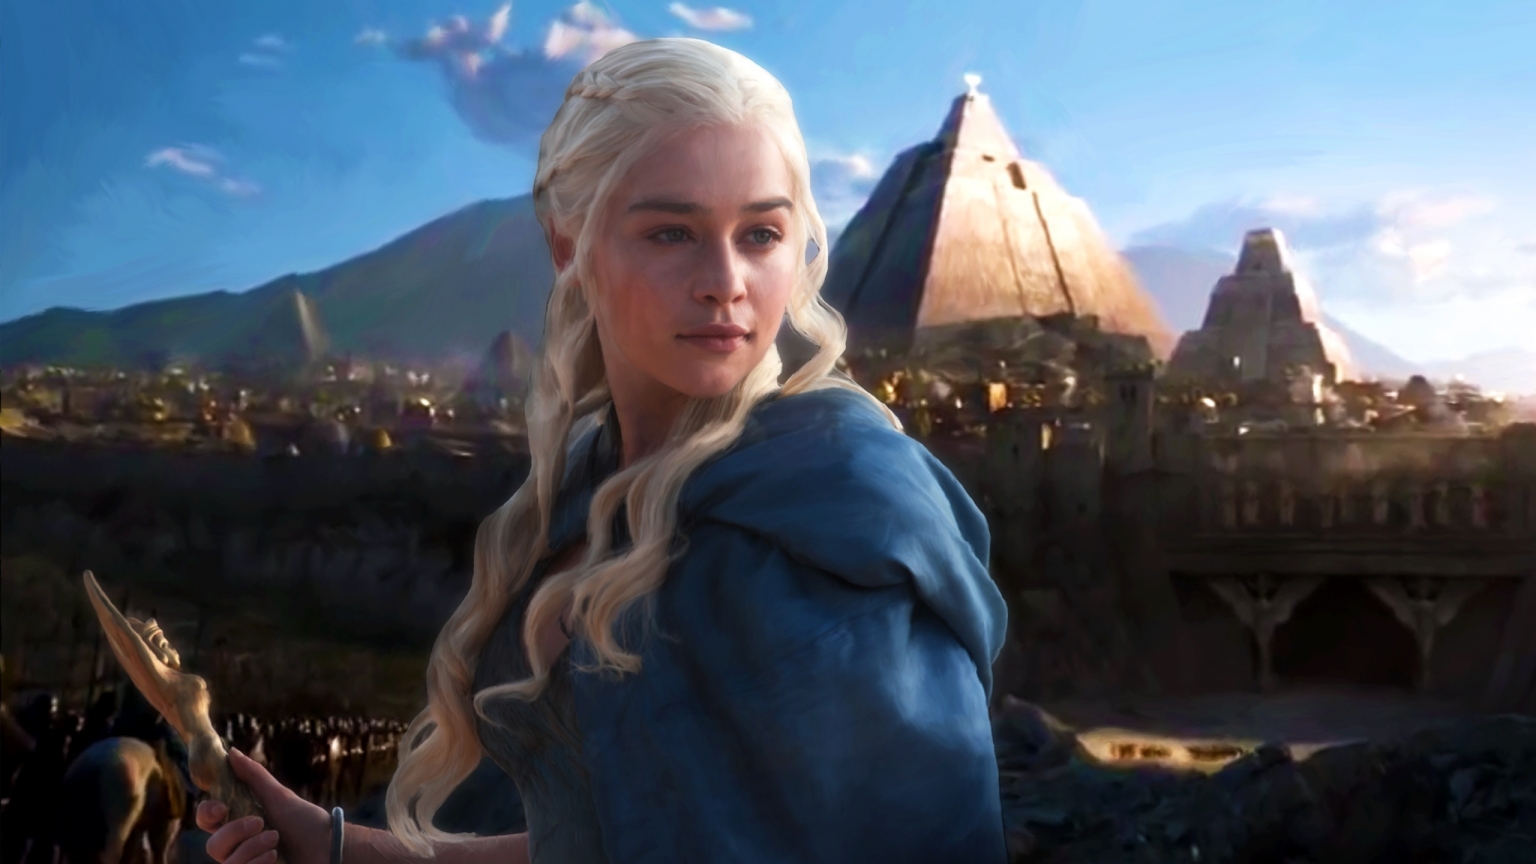 Daenerys Targaryen Fan Art for 1536 x 864 HDTV resolution